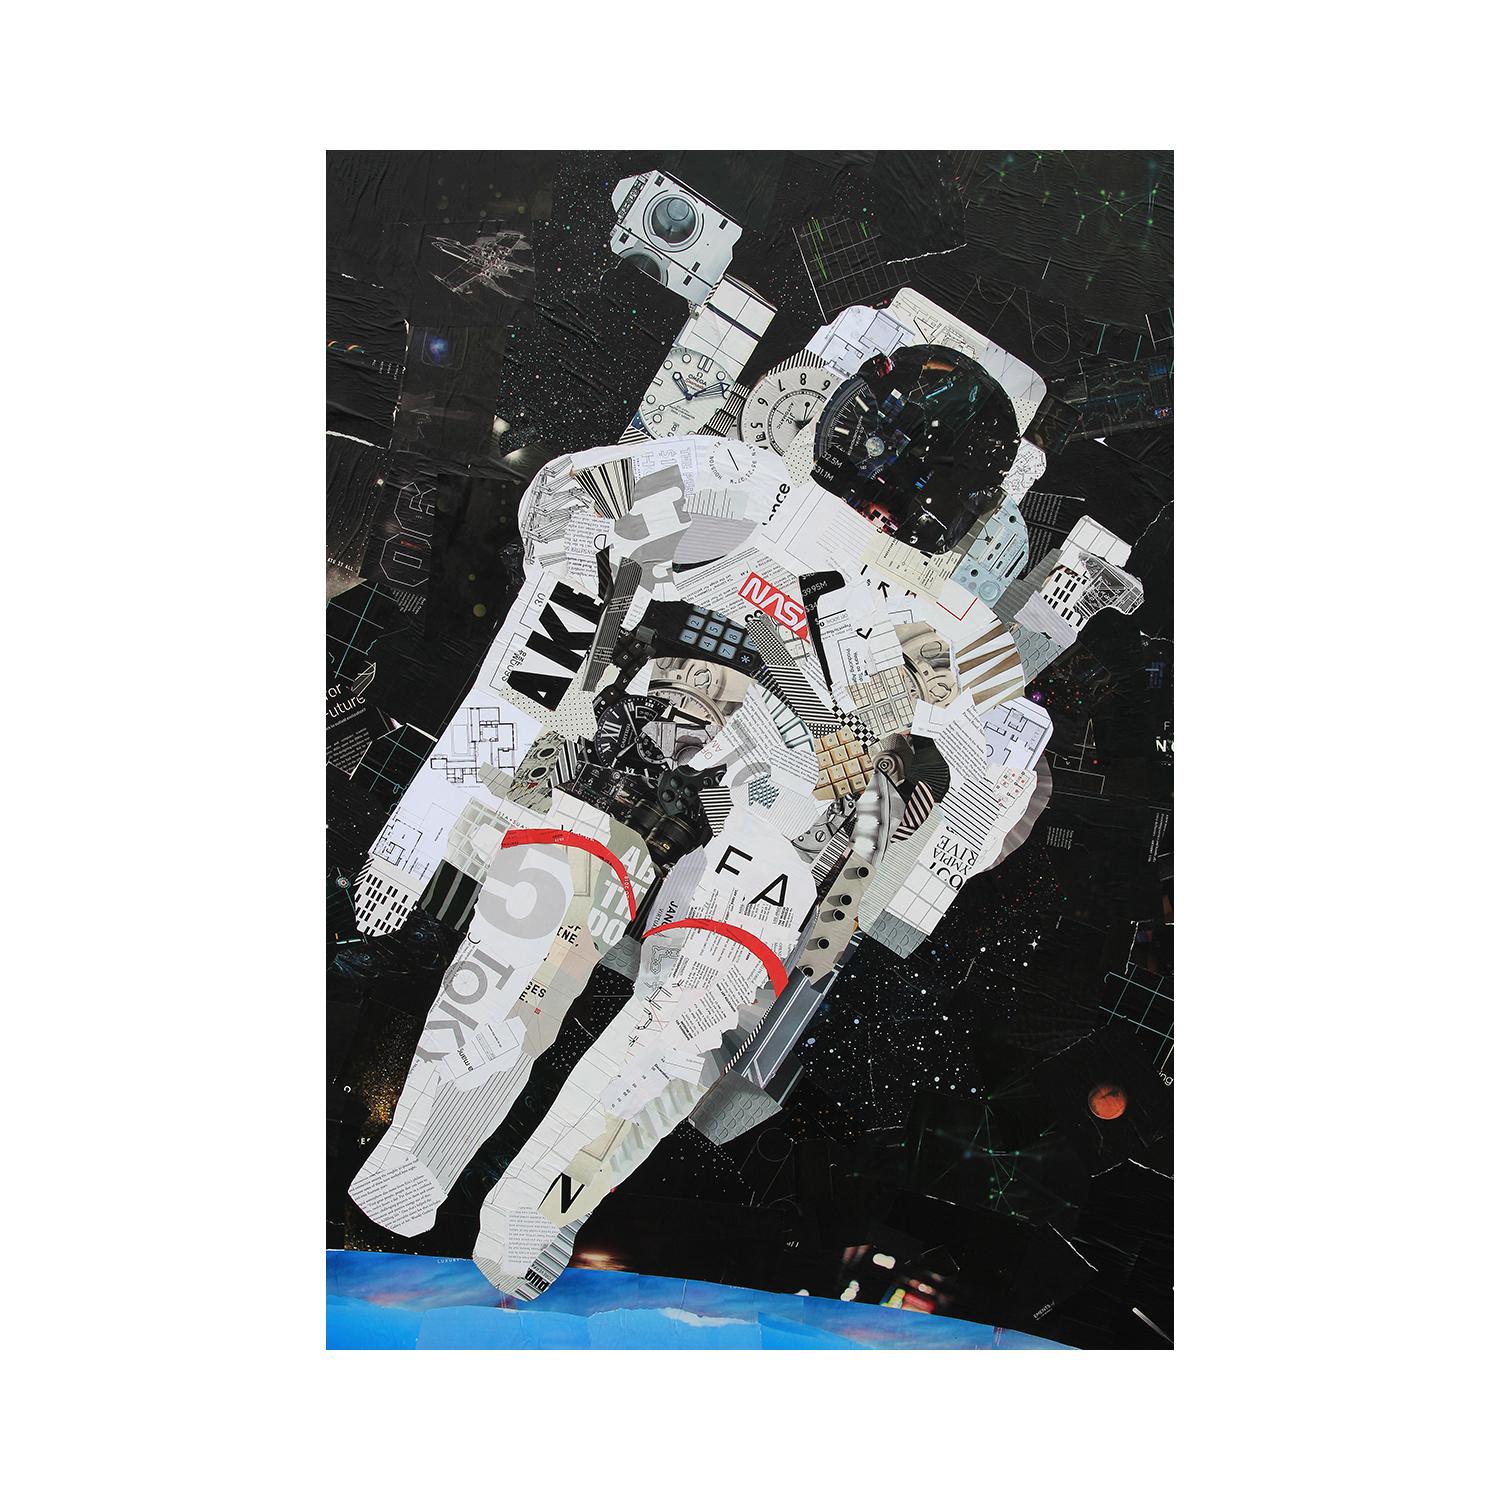 “Spacewalk” Floating Astronaut Mixed Media Pop Art Assemblage Collage - Black Figurative Painting by Jim Hudek